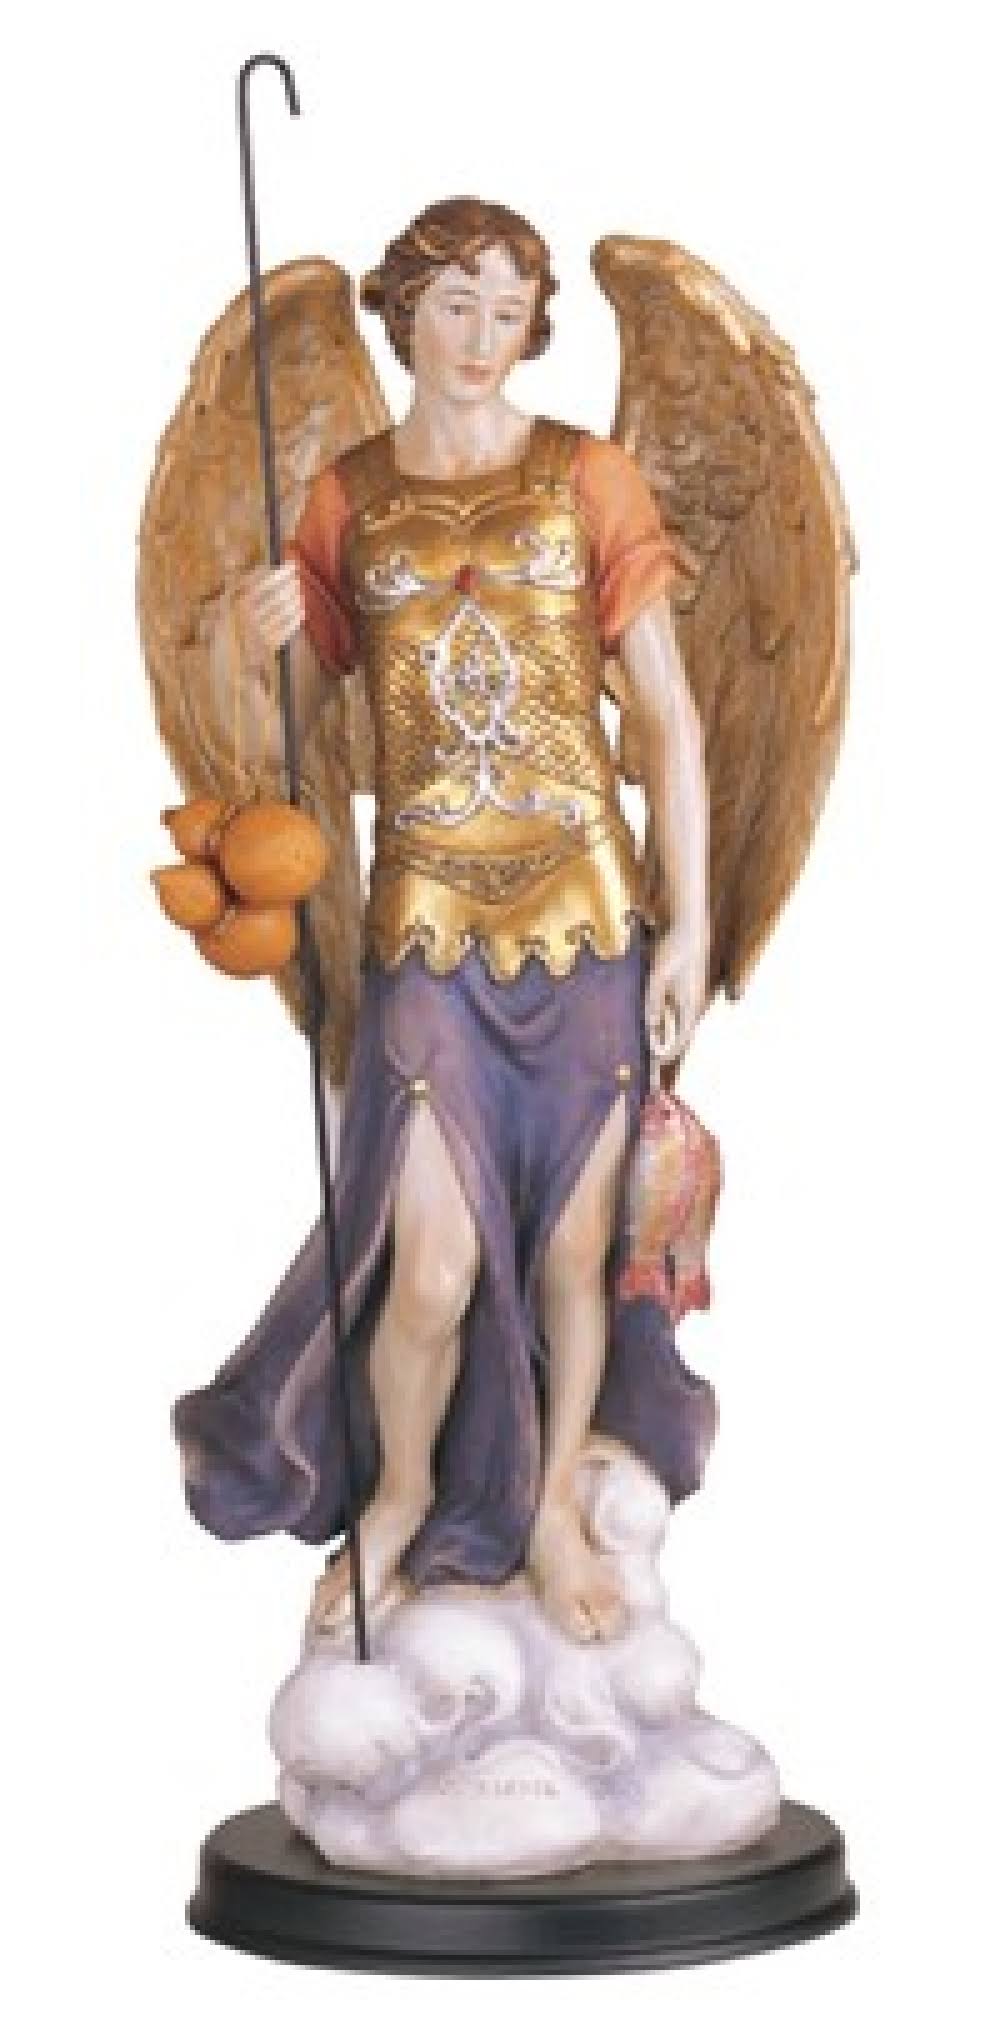 George S. Chen Imports Archangel Raphael Holy Figurine Religious Decor, 12"